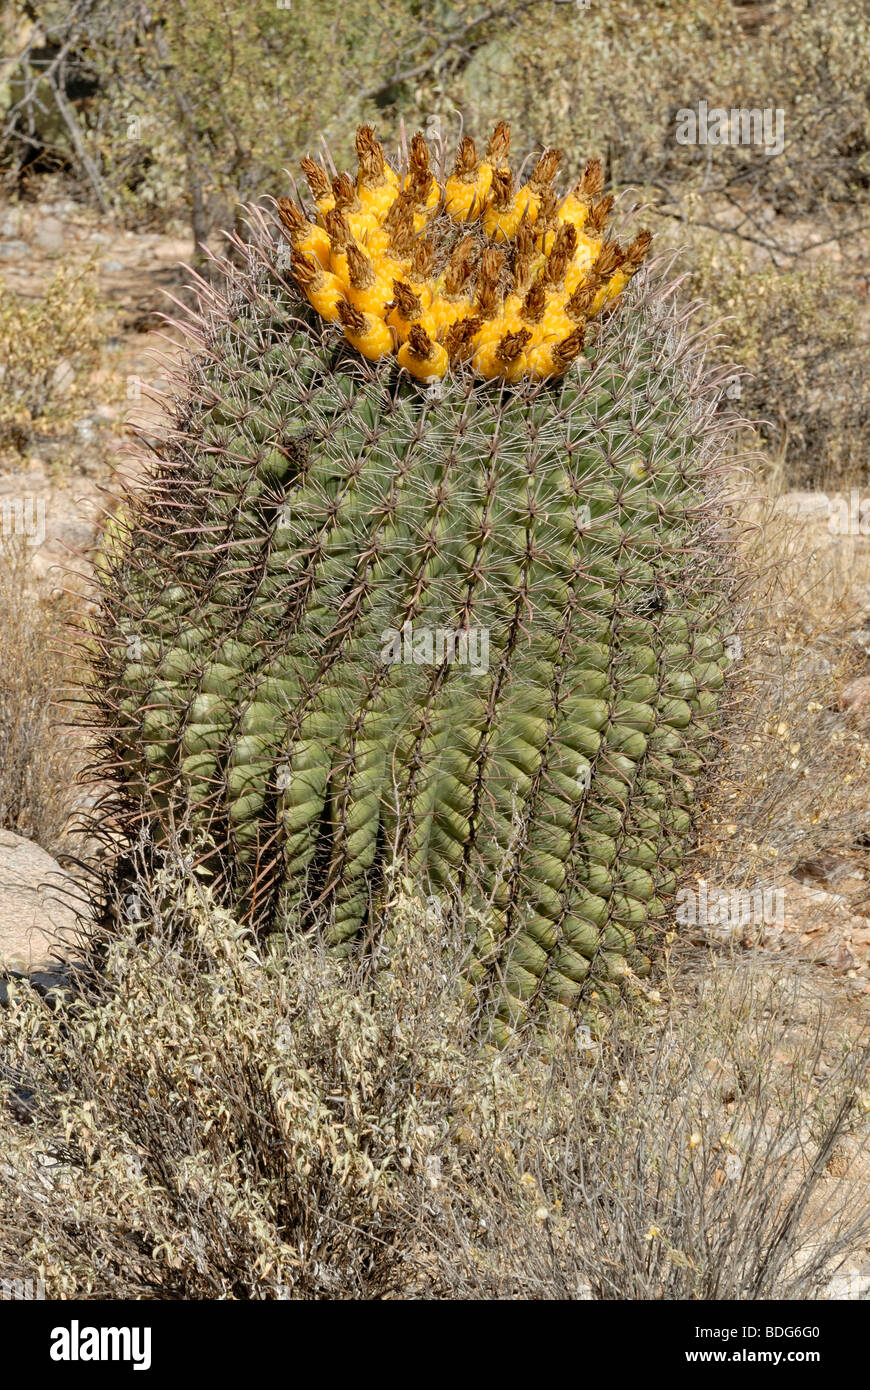 Golden Barrel Cactus (Echinocactus grusonii), also called Mother-in-Law's Cushion, with yellow fruit, Tucson, Arizona, USA Stock Photo